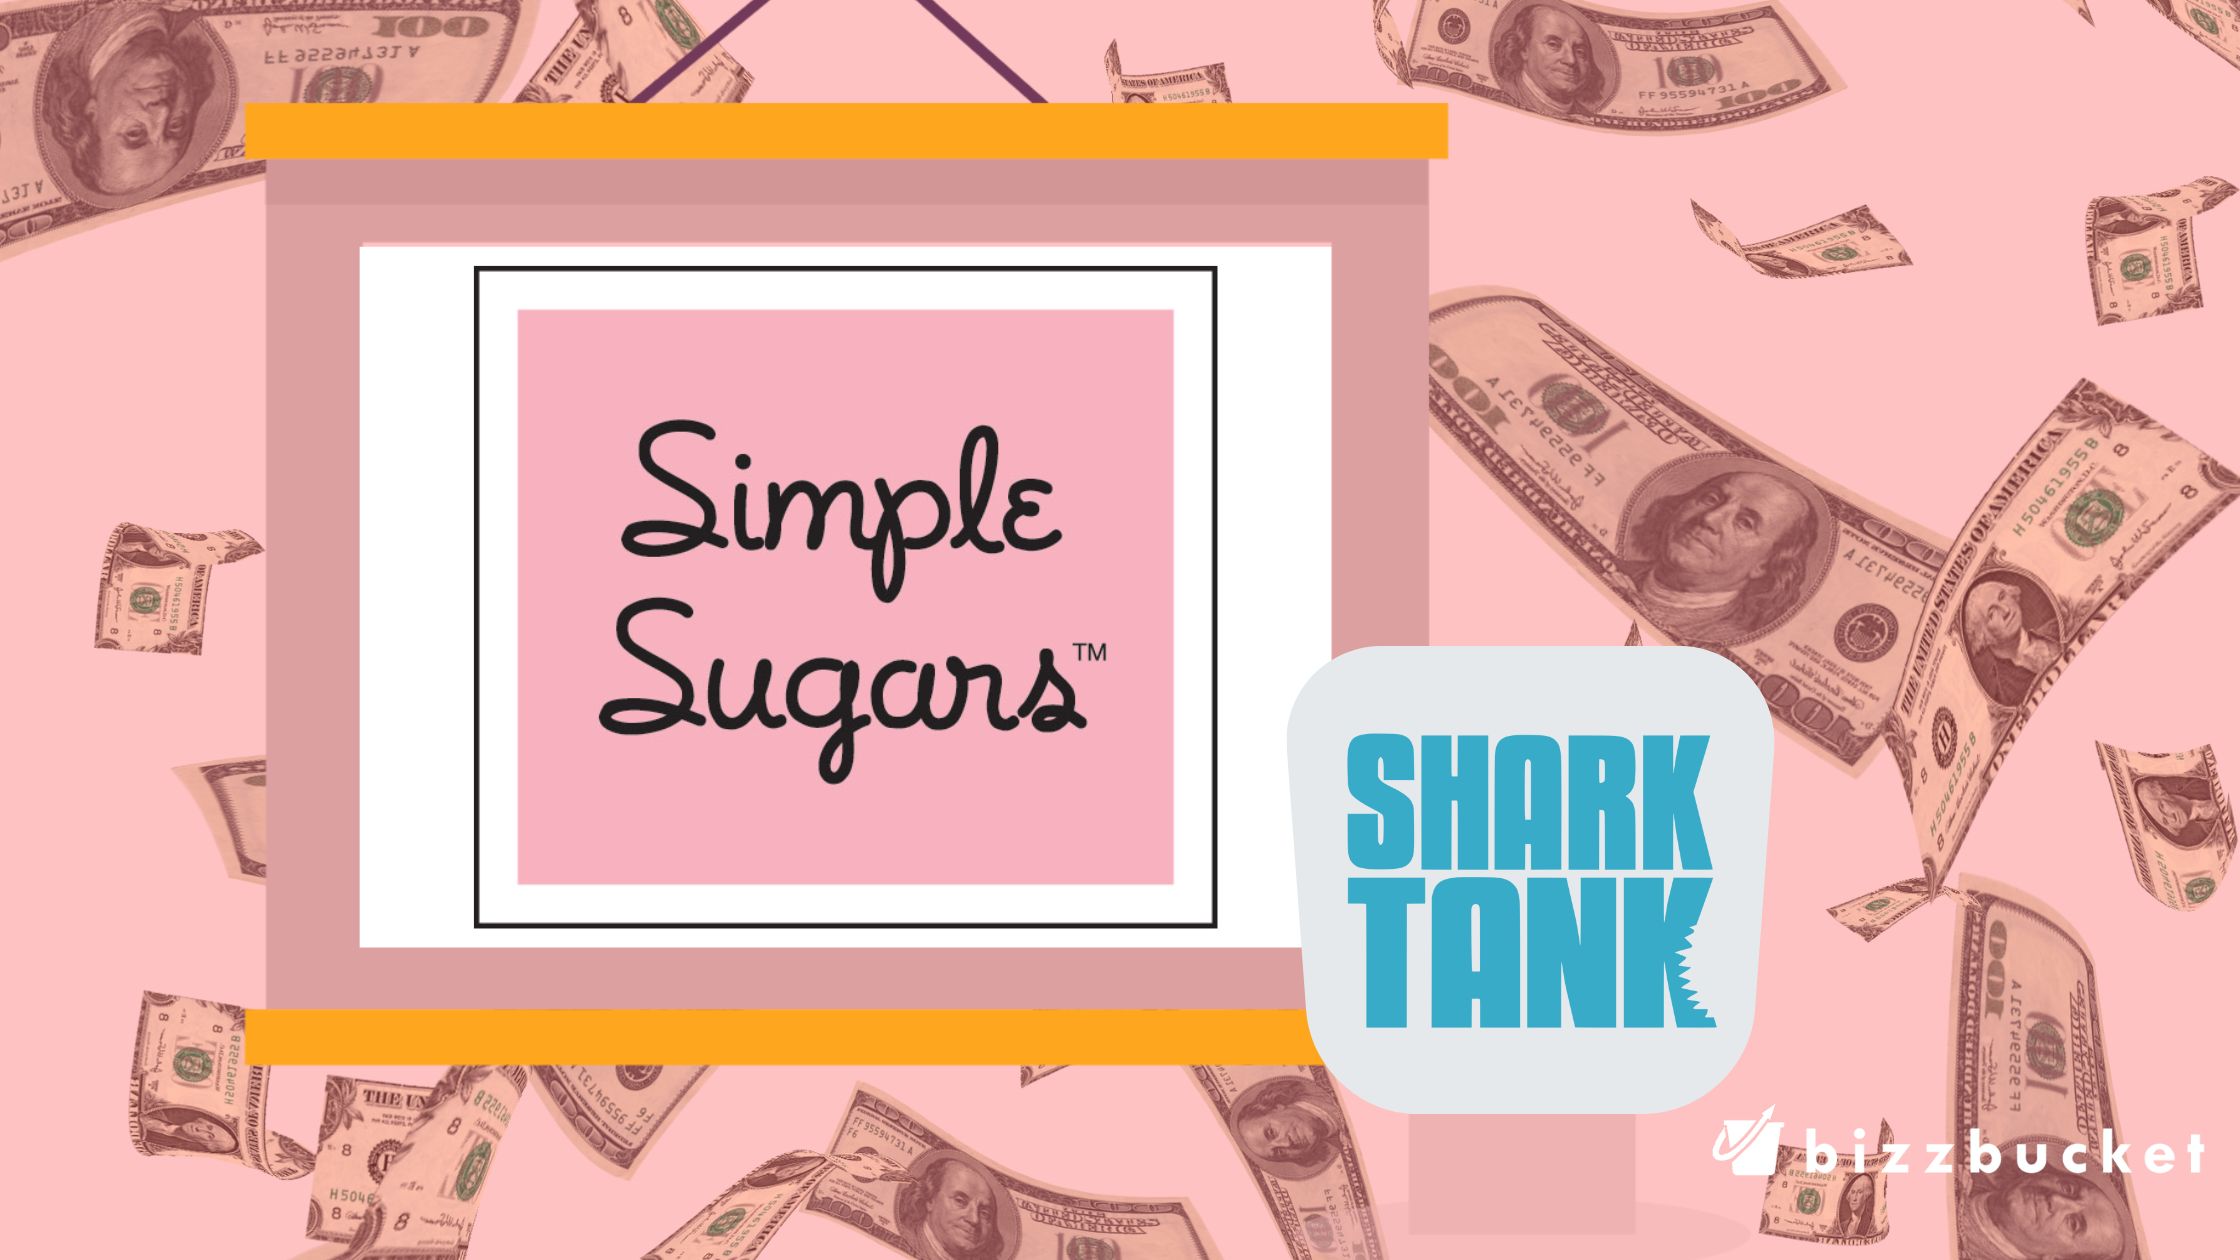 Simple Sugars shark tank update